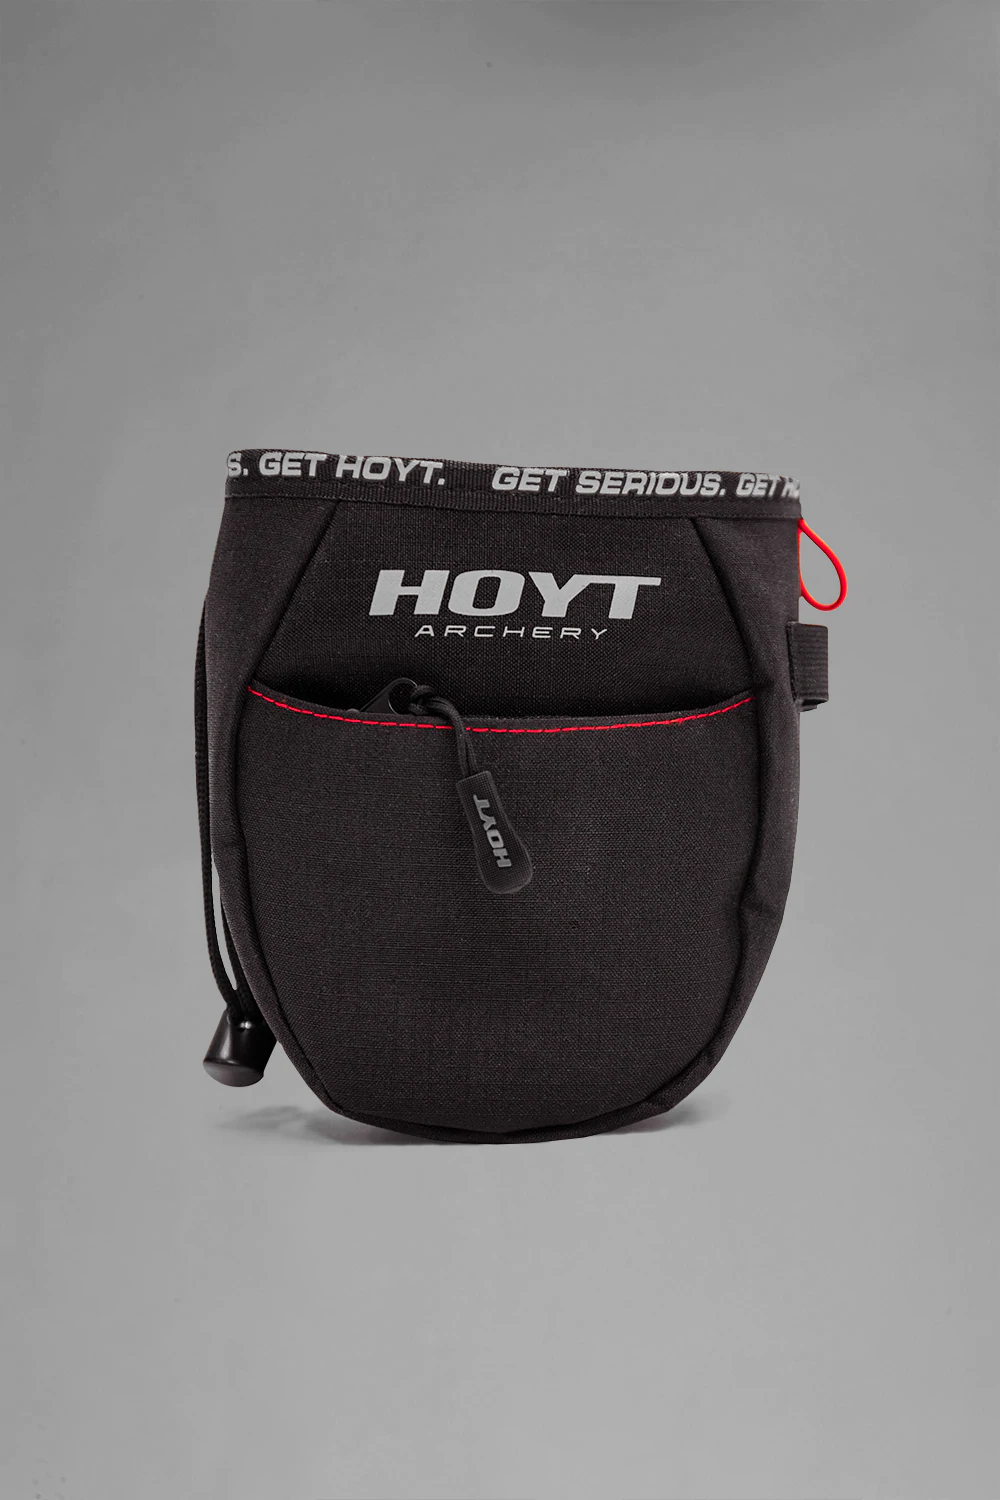 Hoyt Pro Series Release Pouch